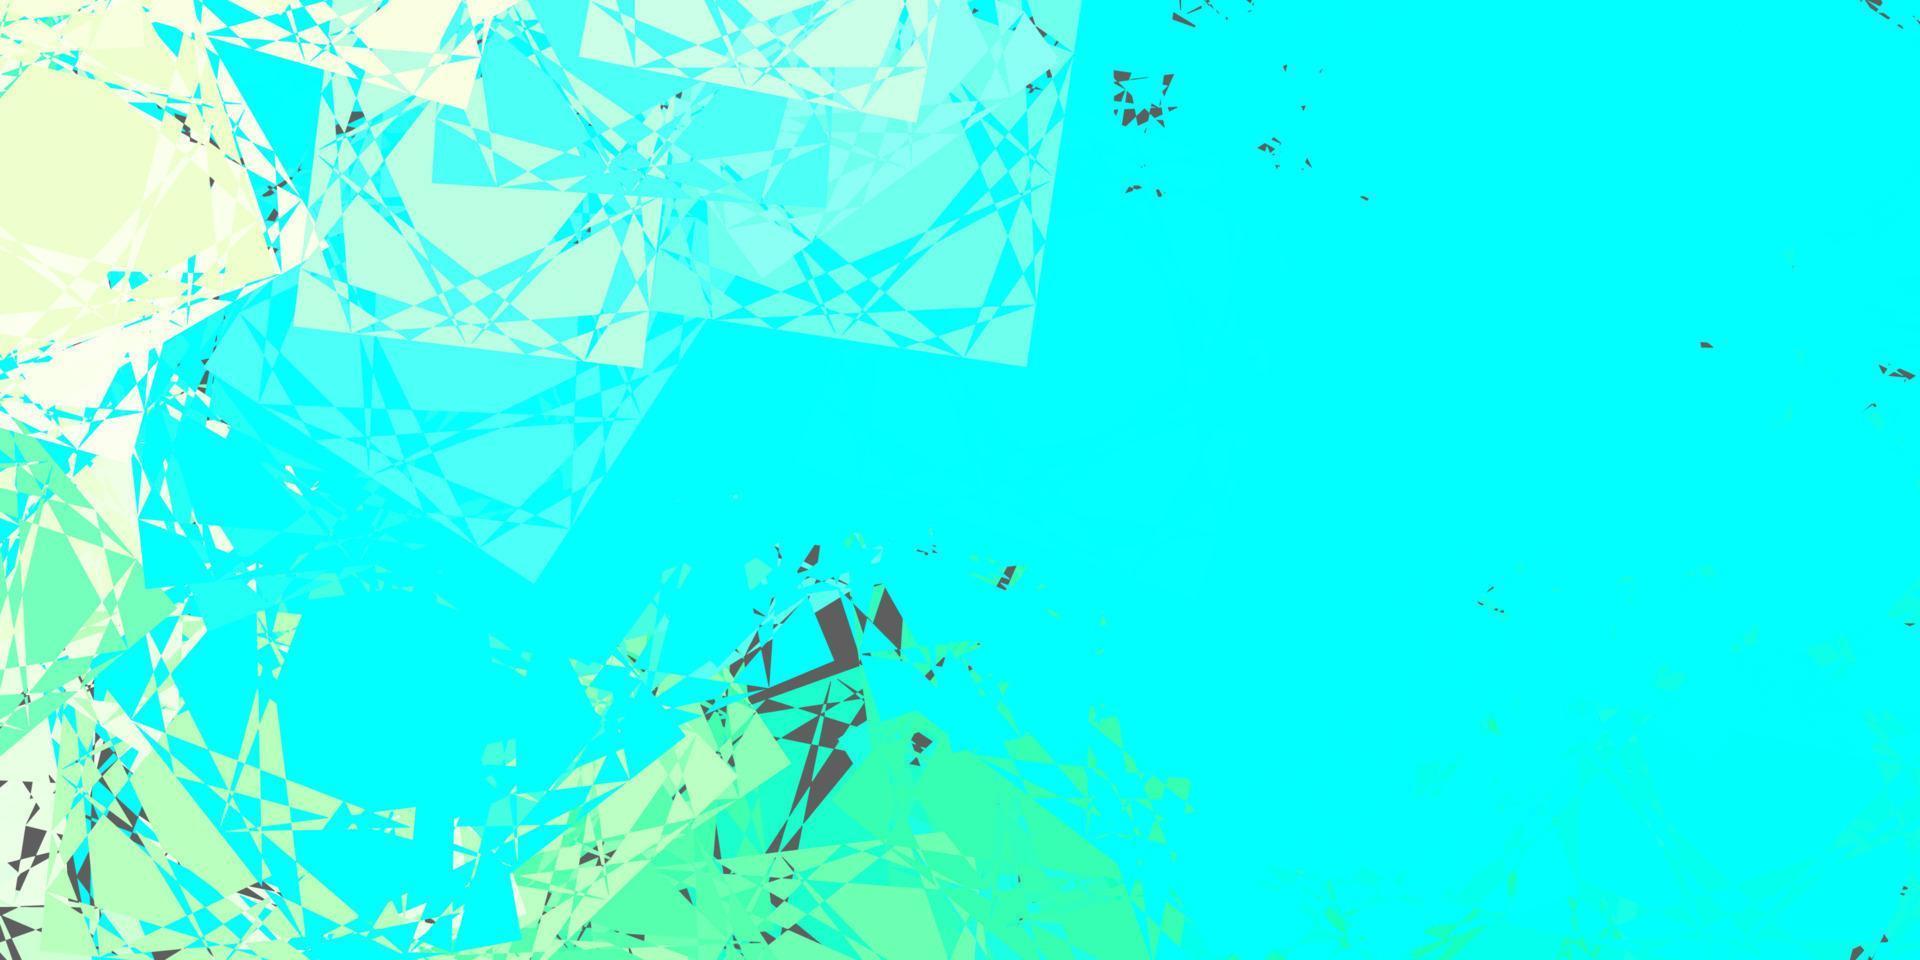 de fundo vector azul, verde claro com formas poligonais.